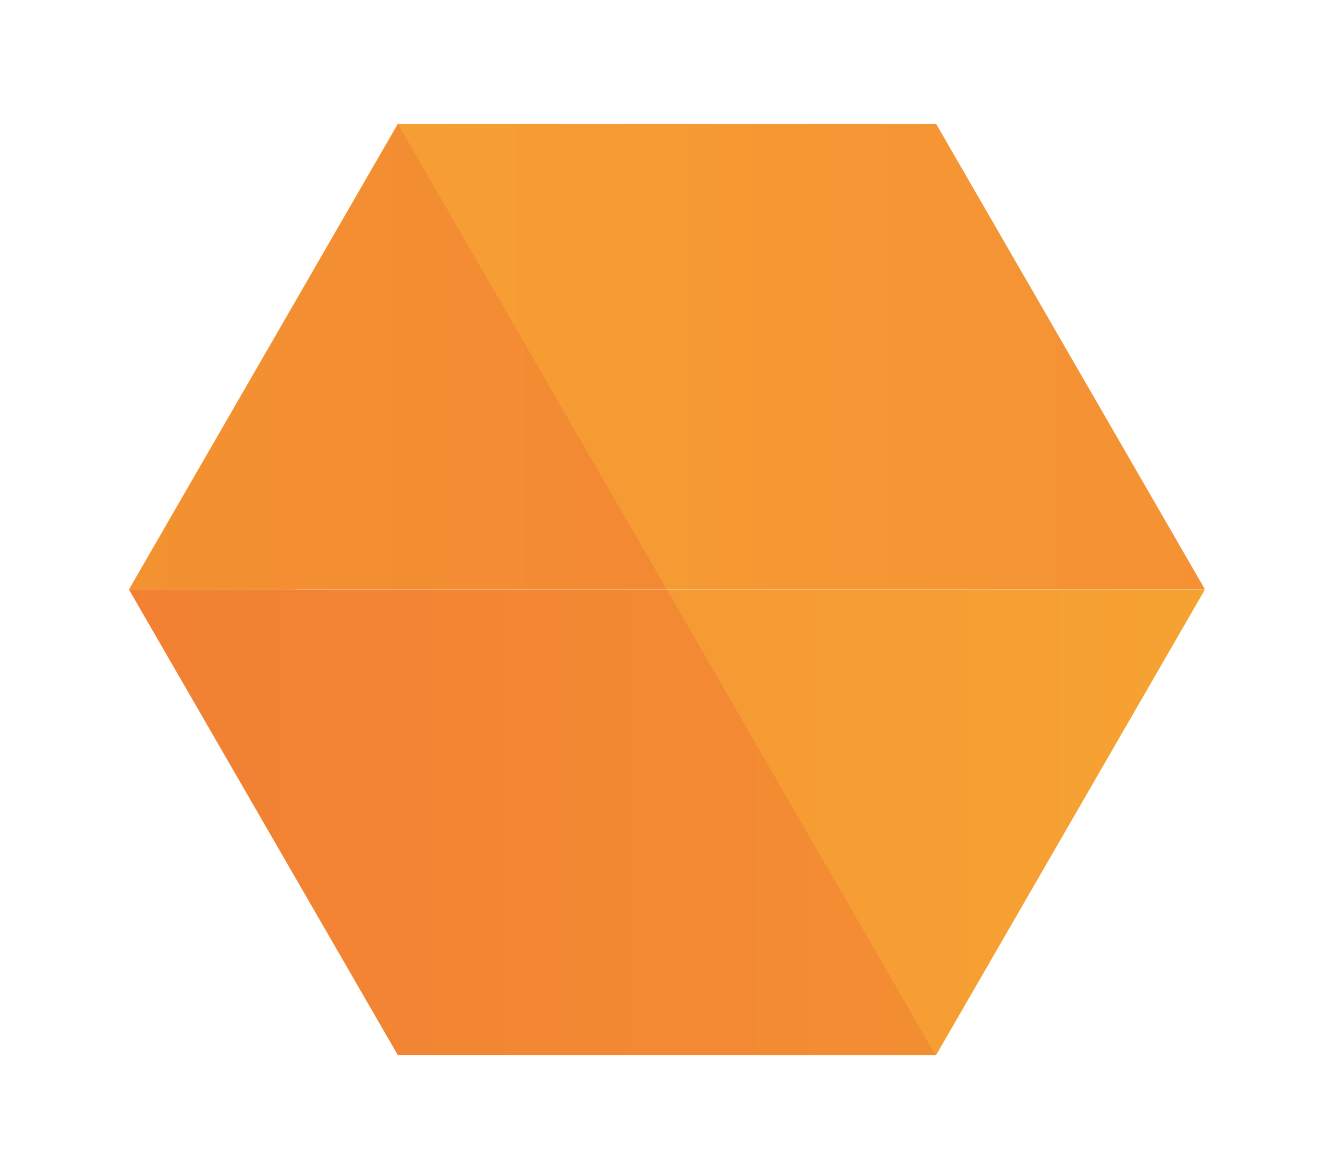 Hexagon clipart orange, Hexagon orange Transparent FREE for